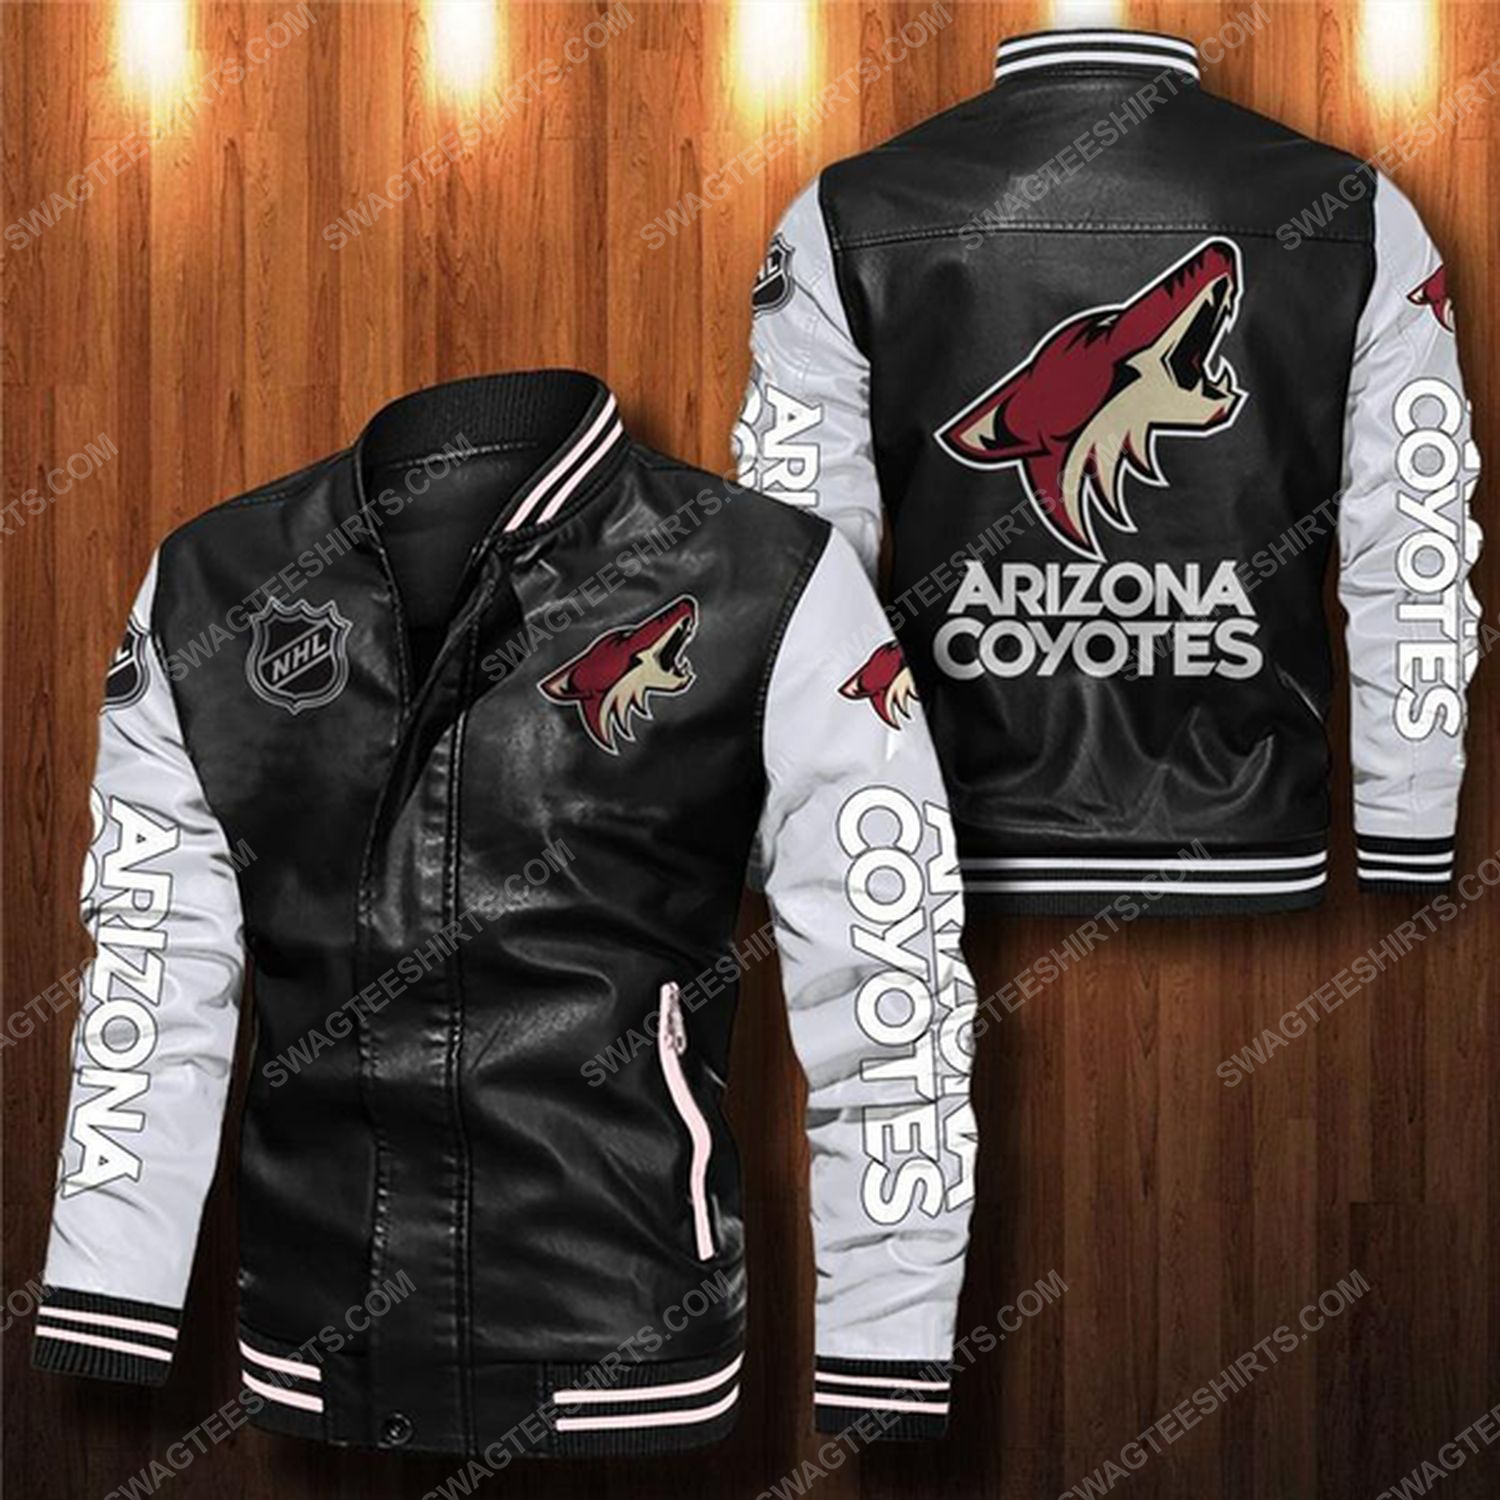 Arizona coyotes all over print leather bomber jacket - white